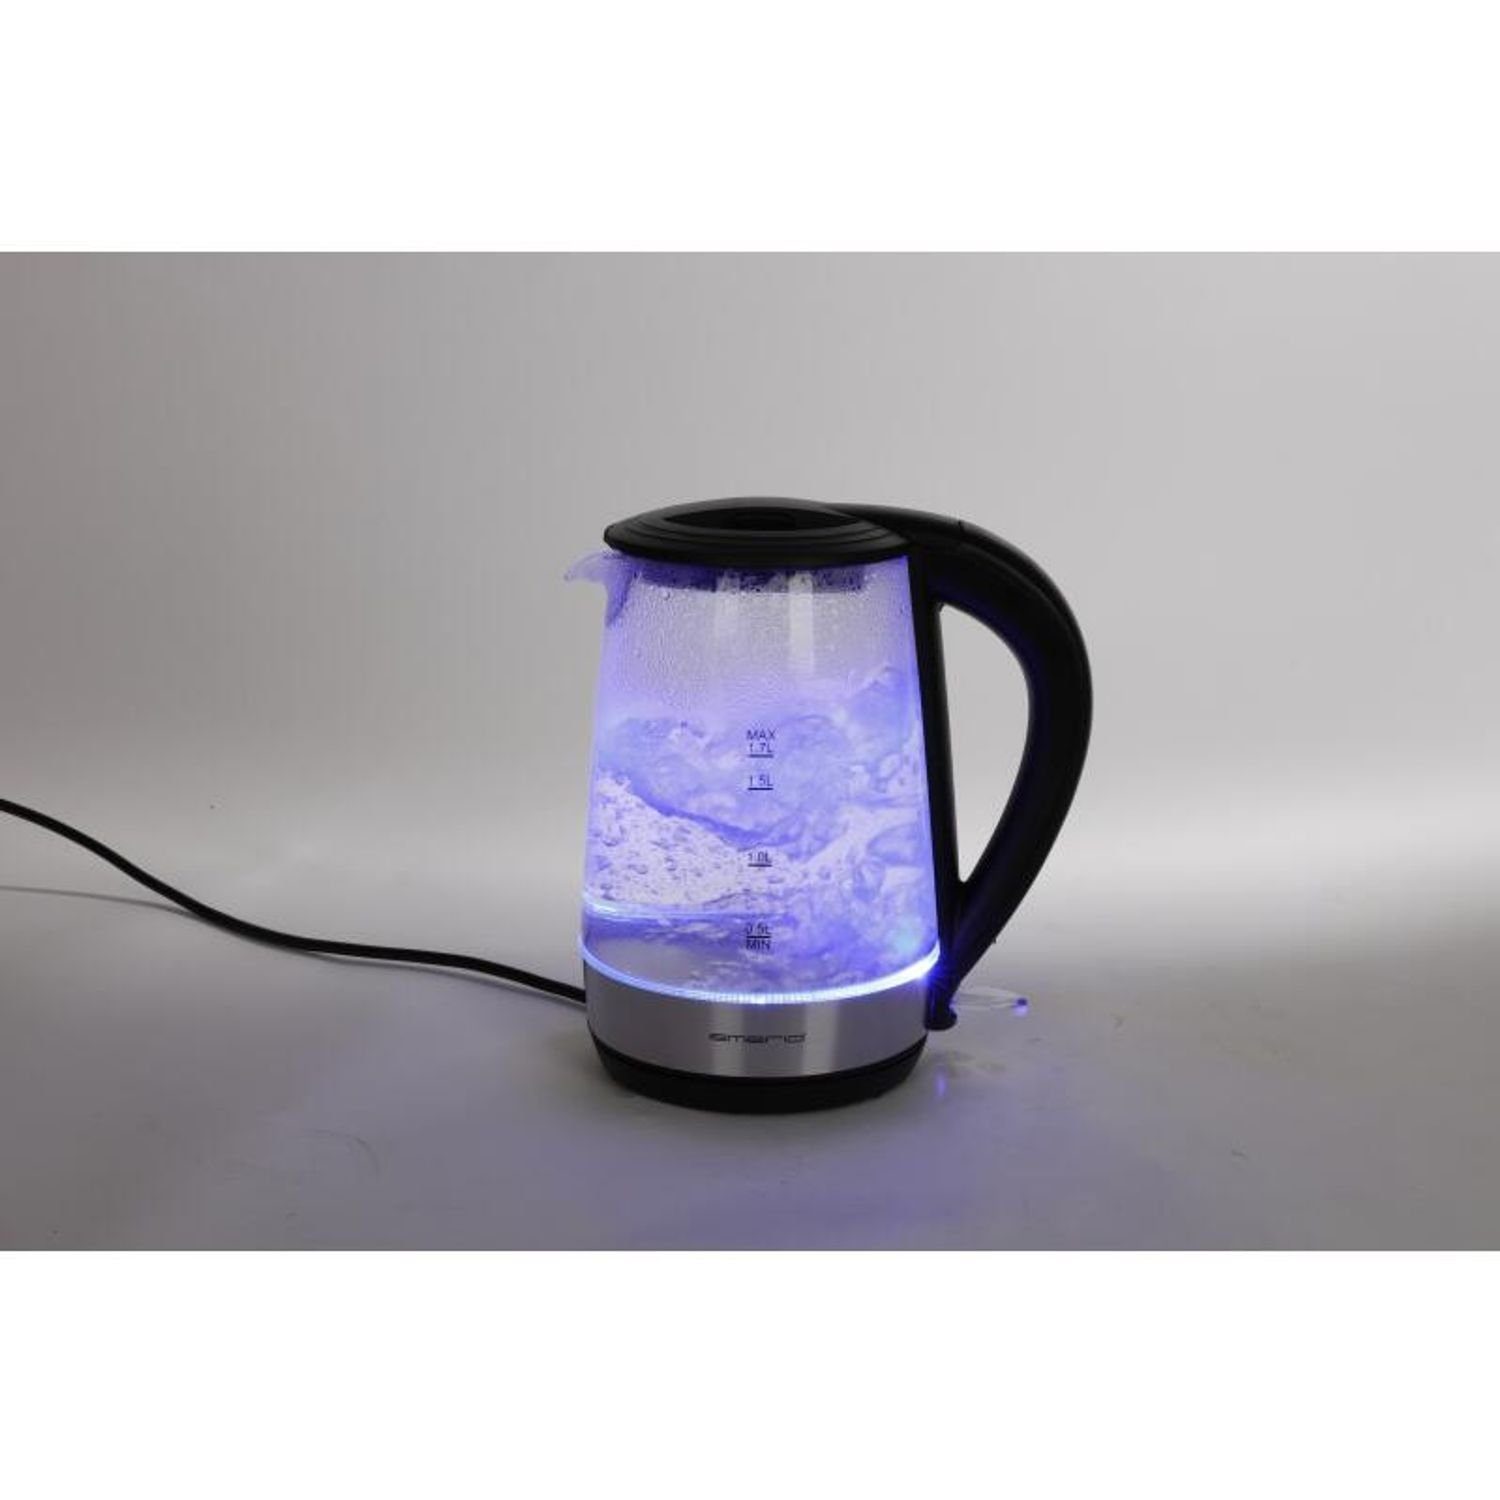 Emerio Wasserkocher Glas Wasserkocher Kettle Beleuchtung Kabellos Kü Erwärmen Tee LED 1,7L